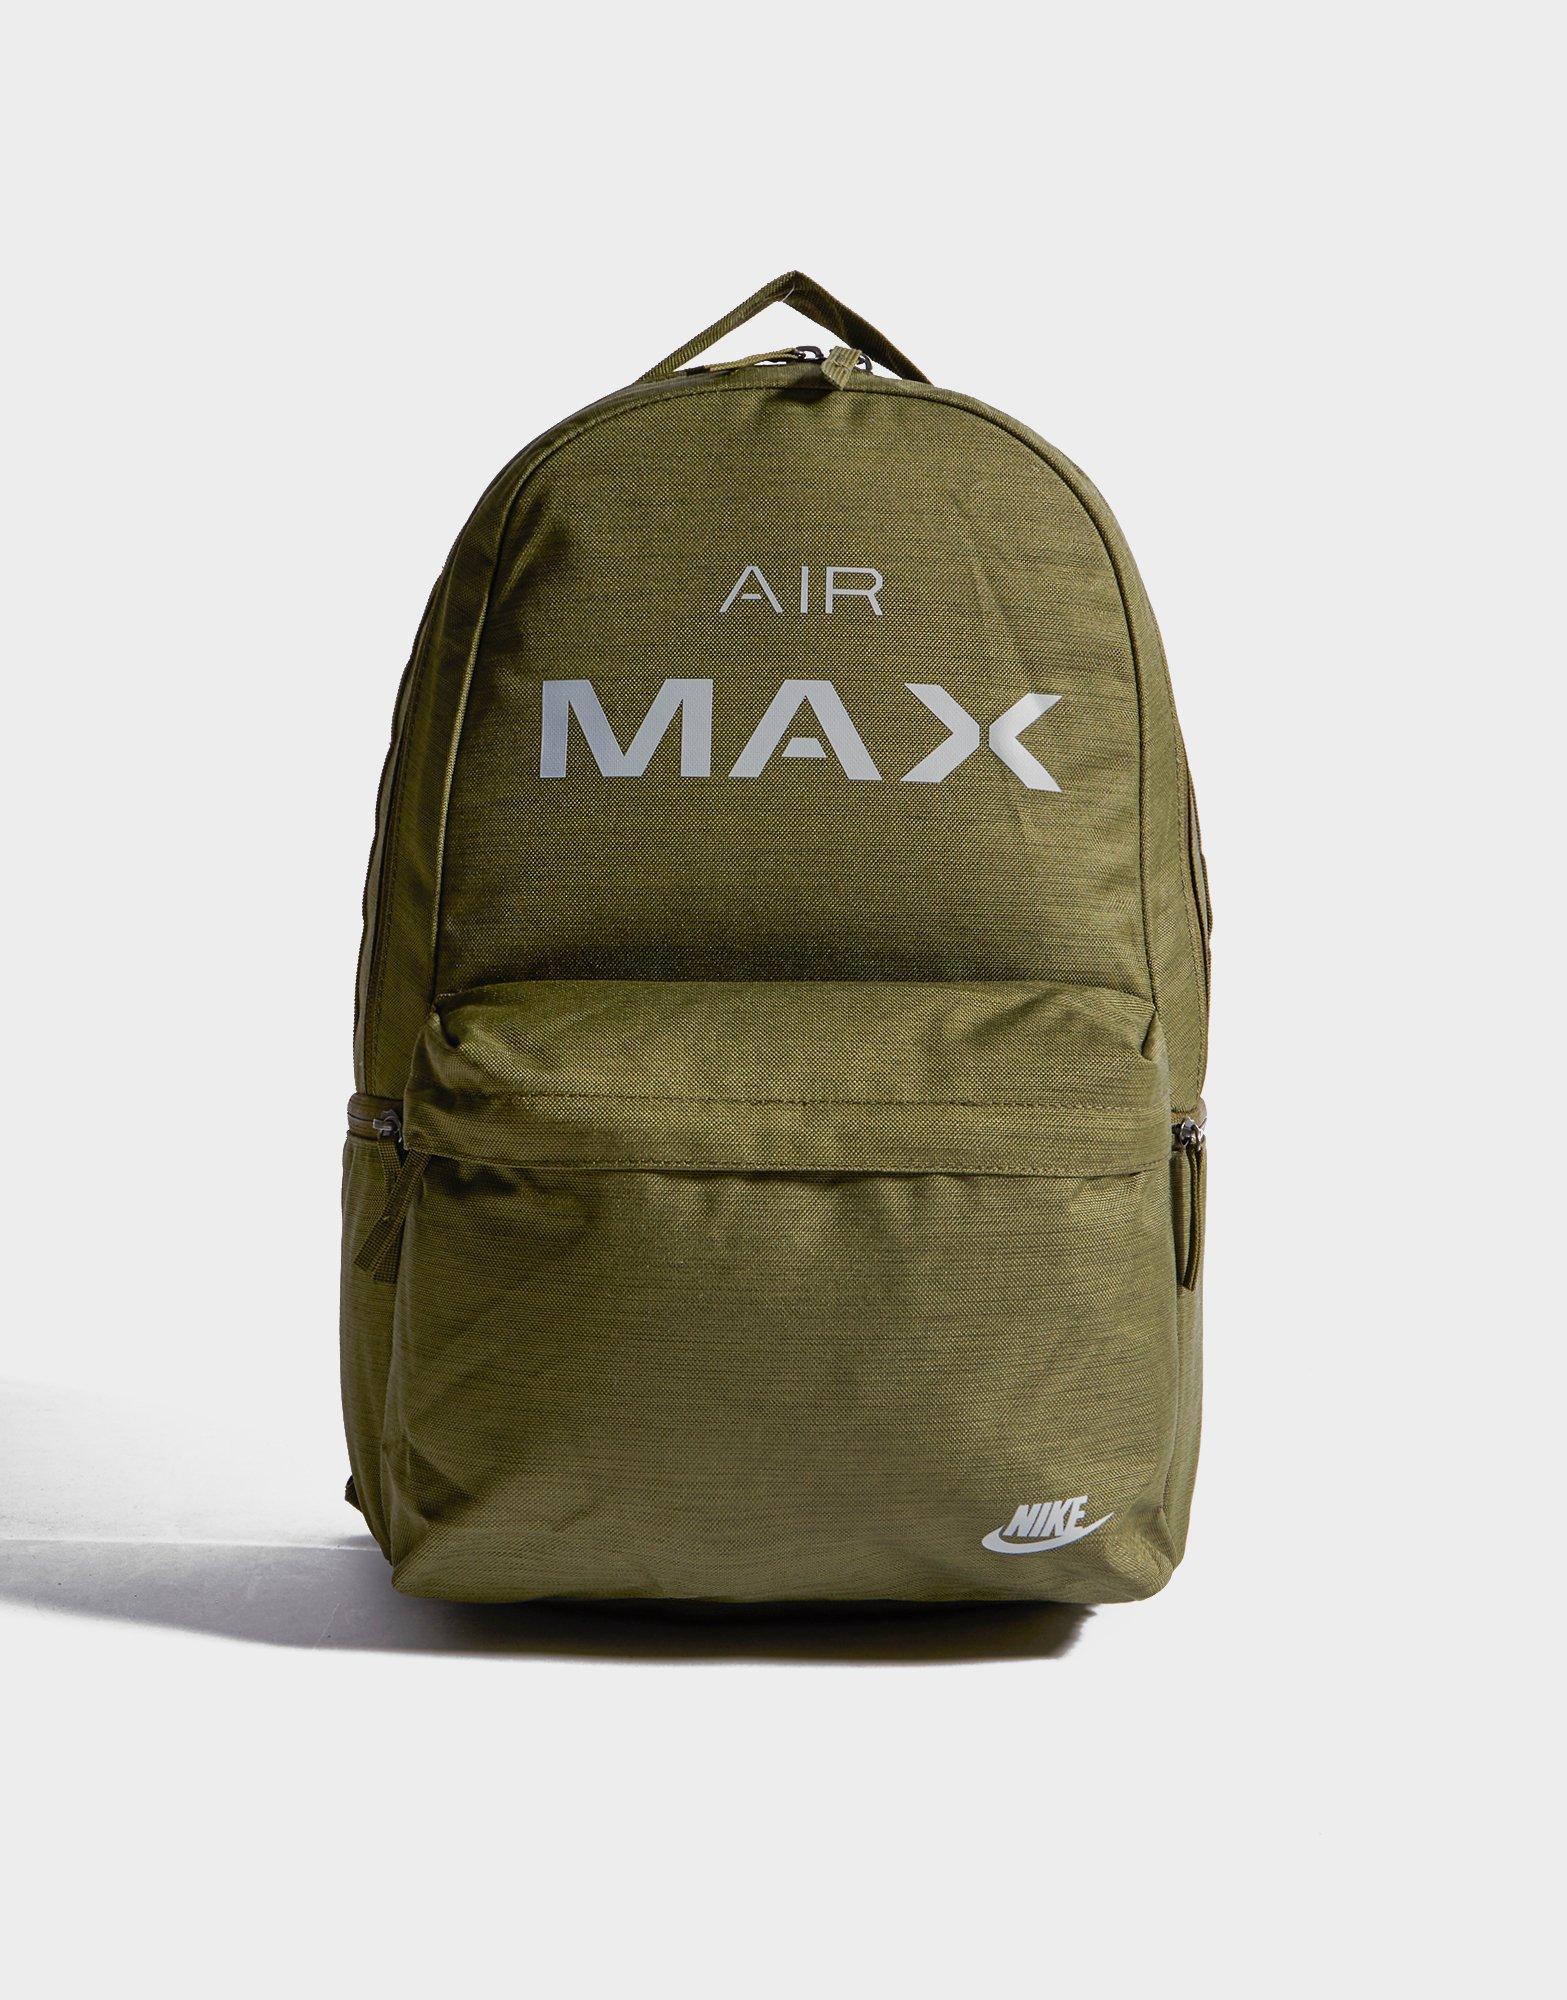 nike air backpack green, OFF 70%,Cheap!